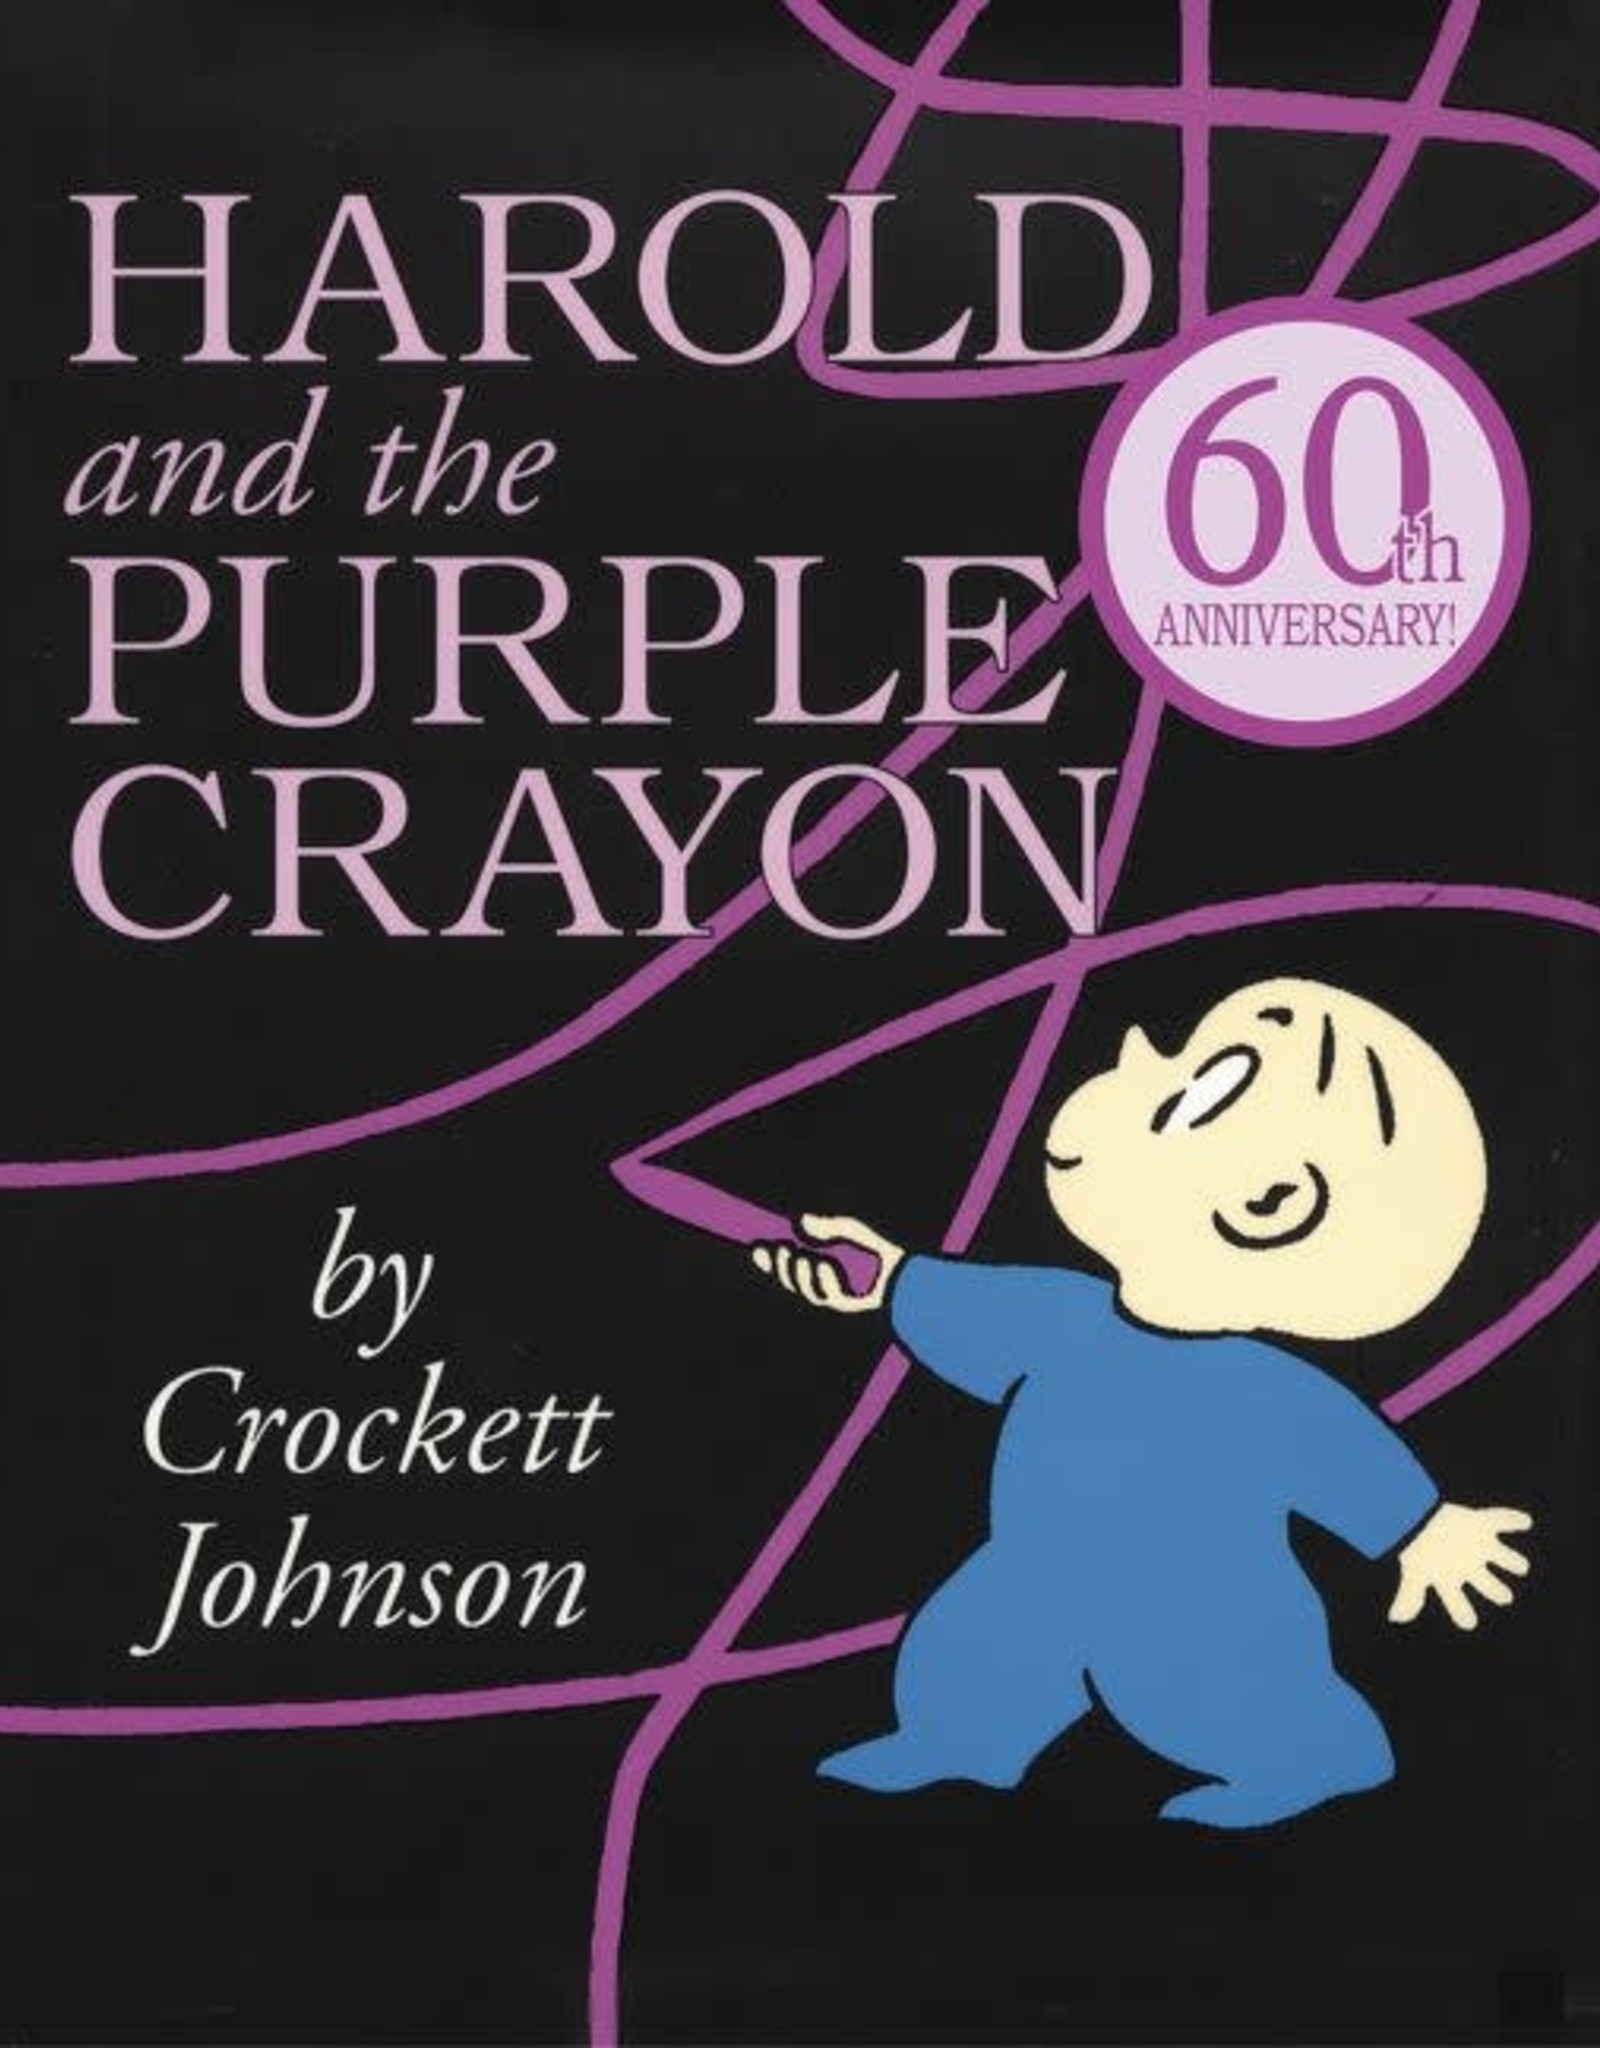 Harper Collins Harold and the Purple Crayon